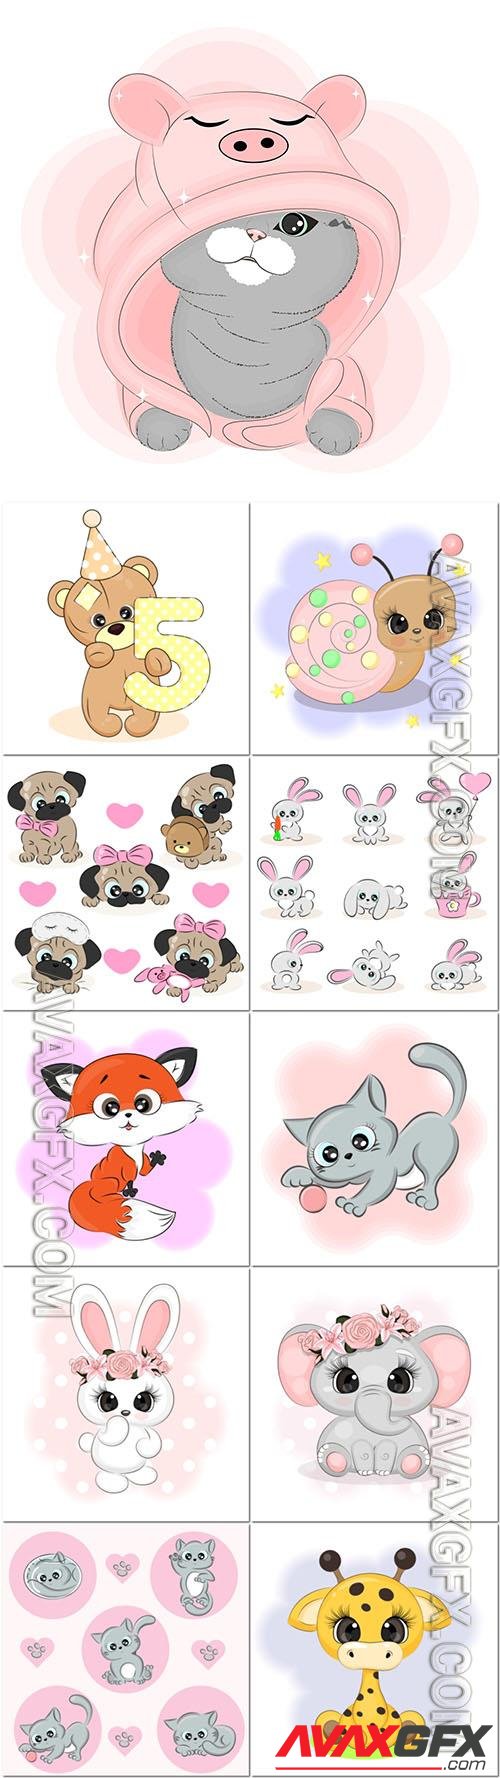 Cute cartoon animals vector set